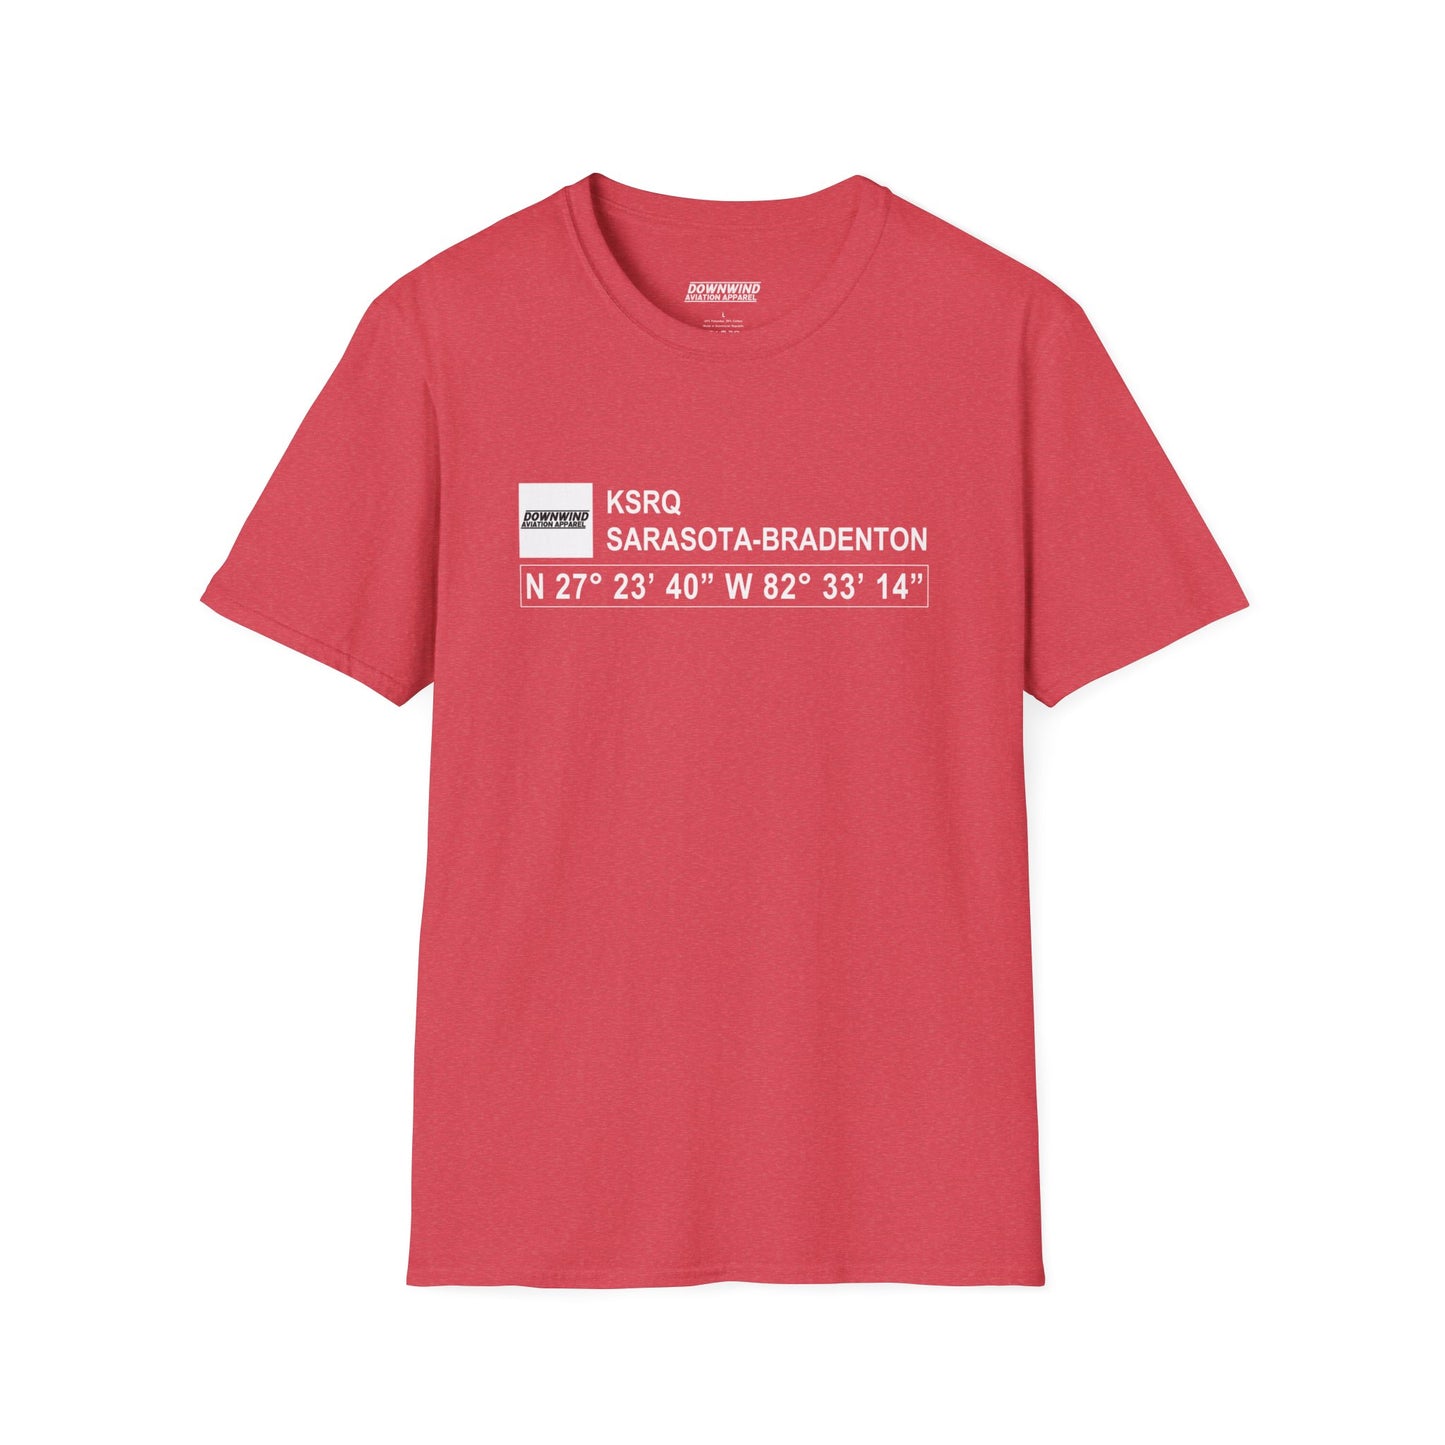 KSRQ / Sarasota-Bradenton T-Shirt